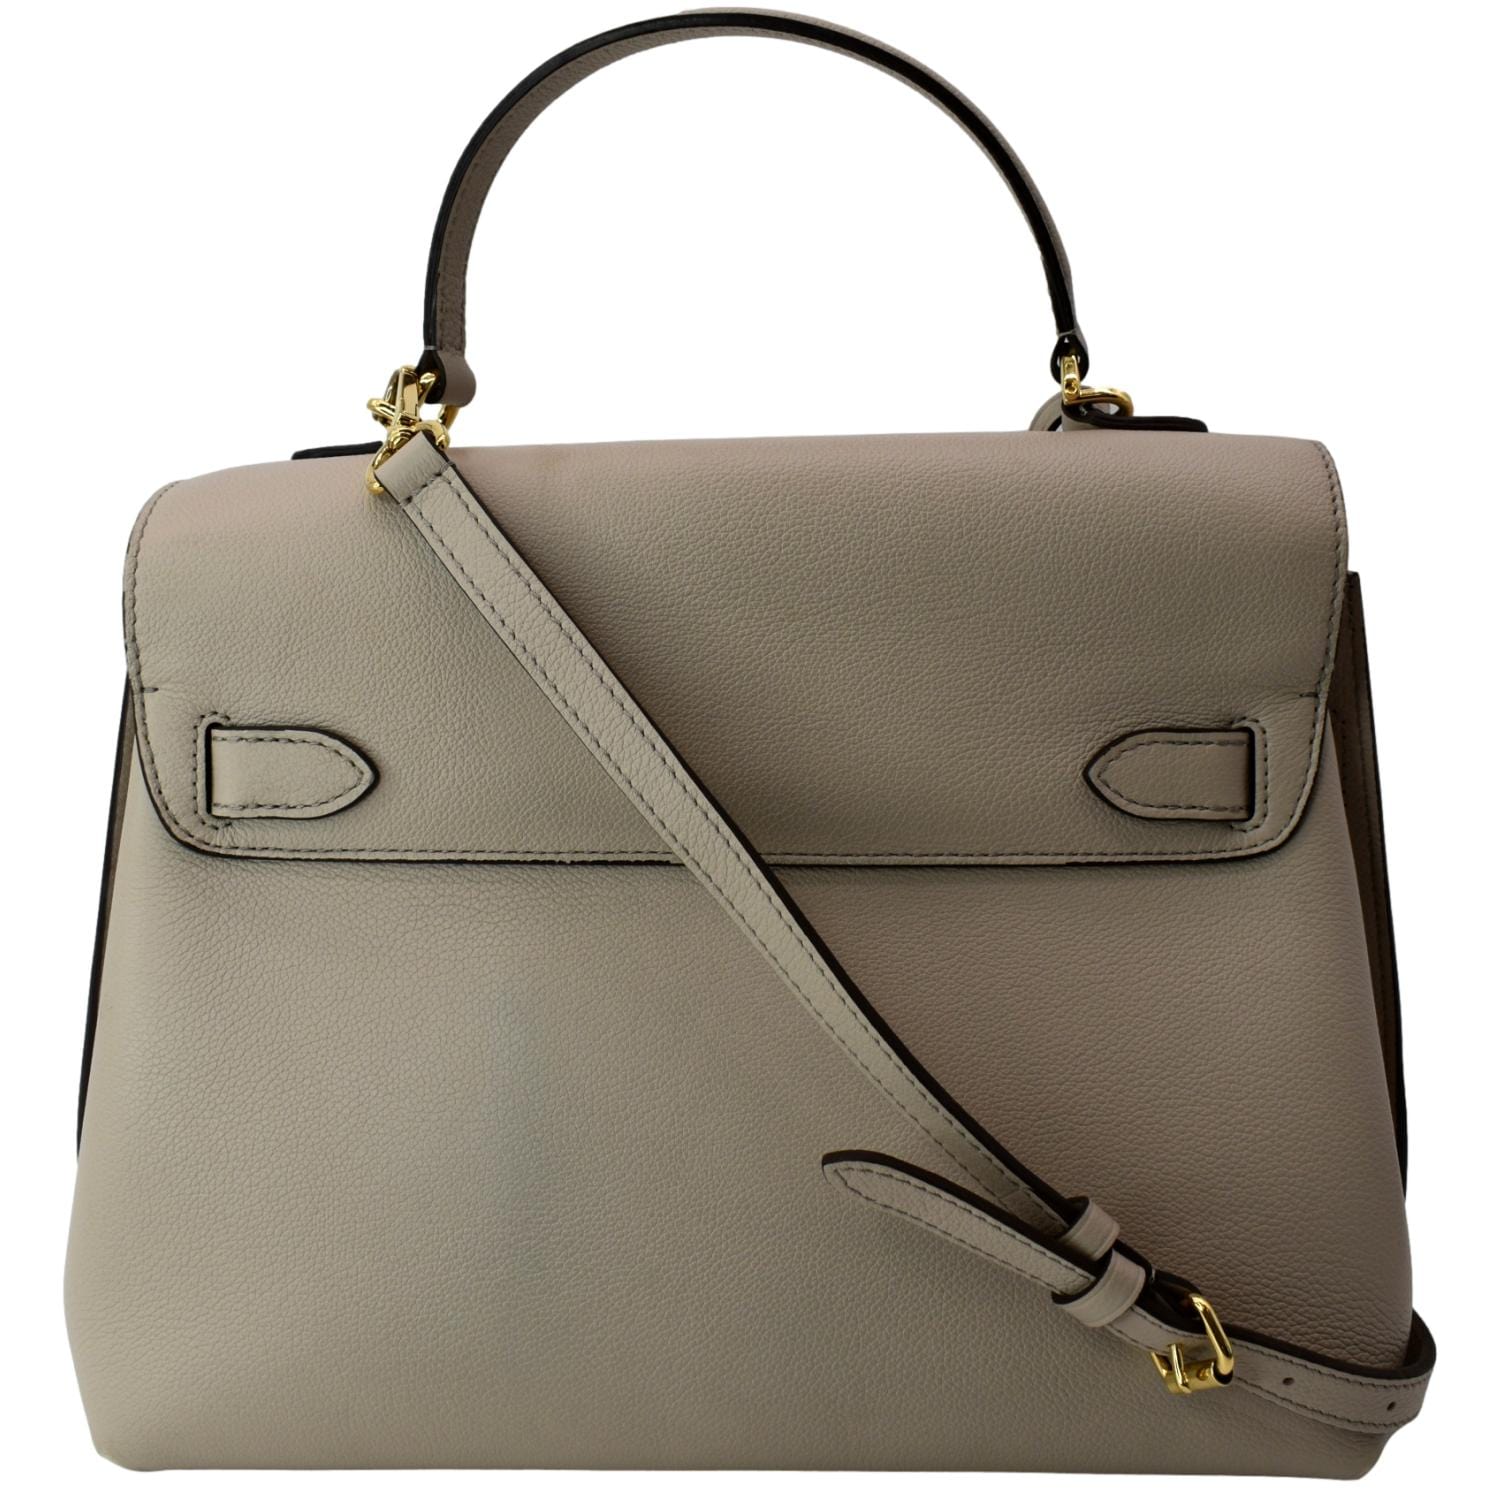 Louis Vuitton - Authenticated Lockme Handbag - Leather Beige Plain for Women, Very Good Condition